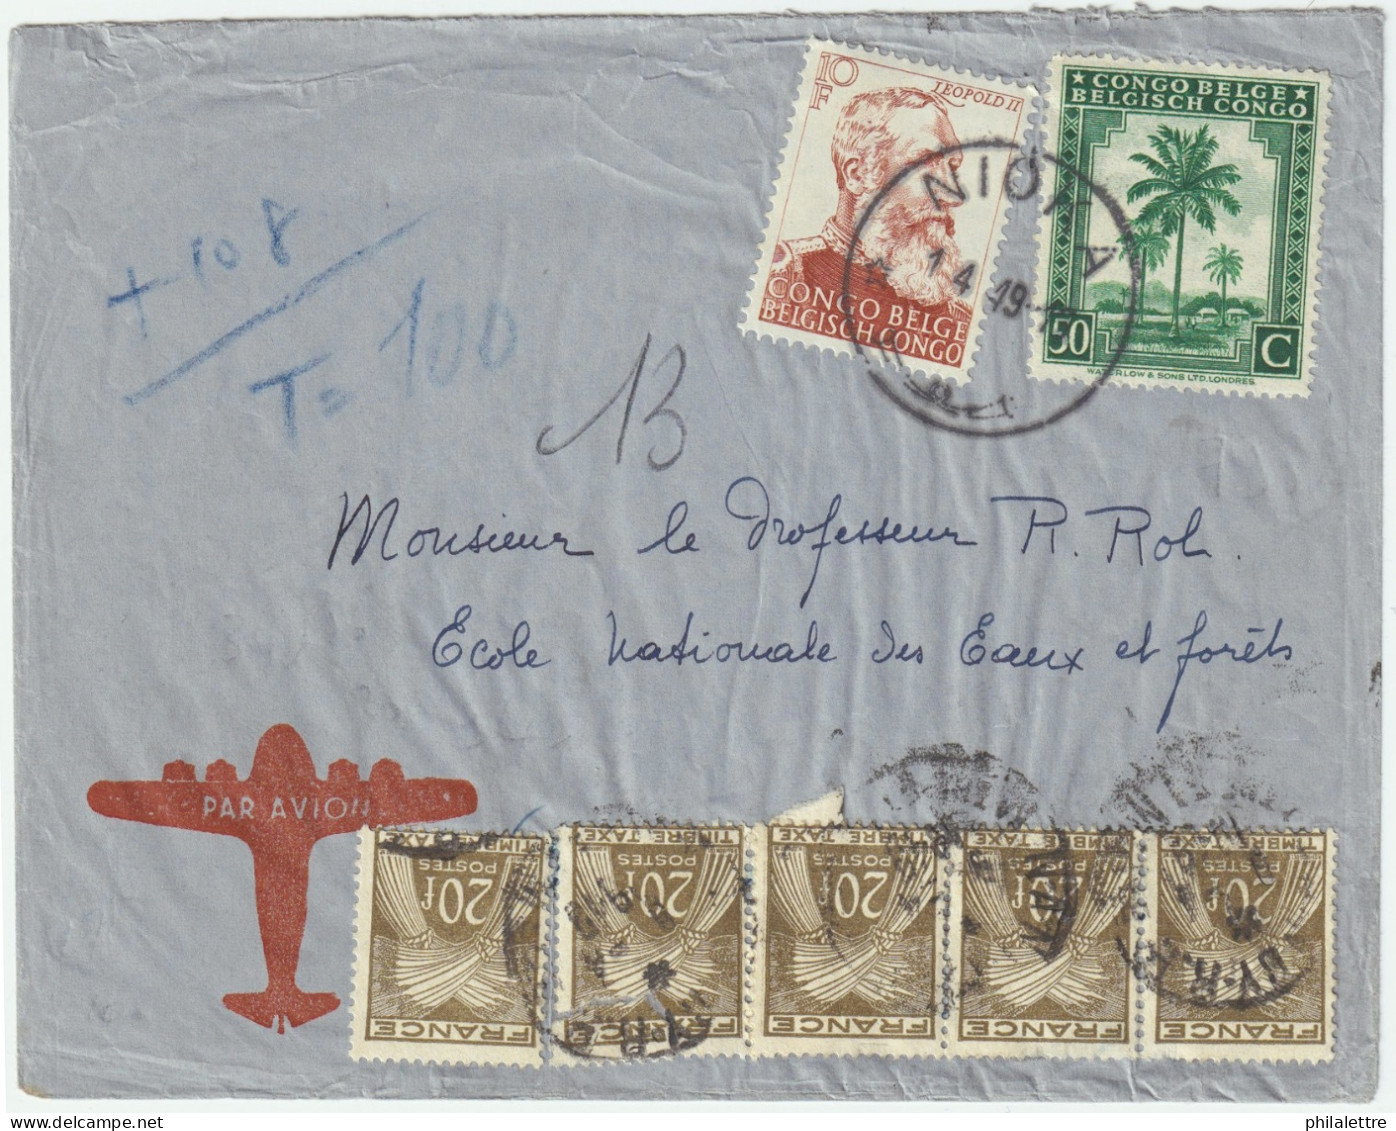 CONGO BELGE Pour La FRANCE - 1949 LSC AVION Affranchie 10fr50c From NIOKA To NANCY, Taxée 100fr (5x20fr Type Gerbes) - 1859-1959 Covers & Documents